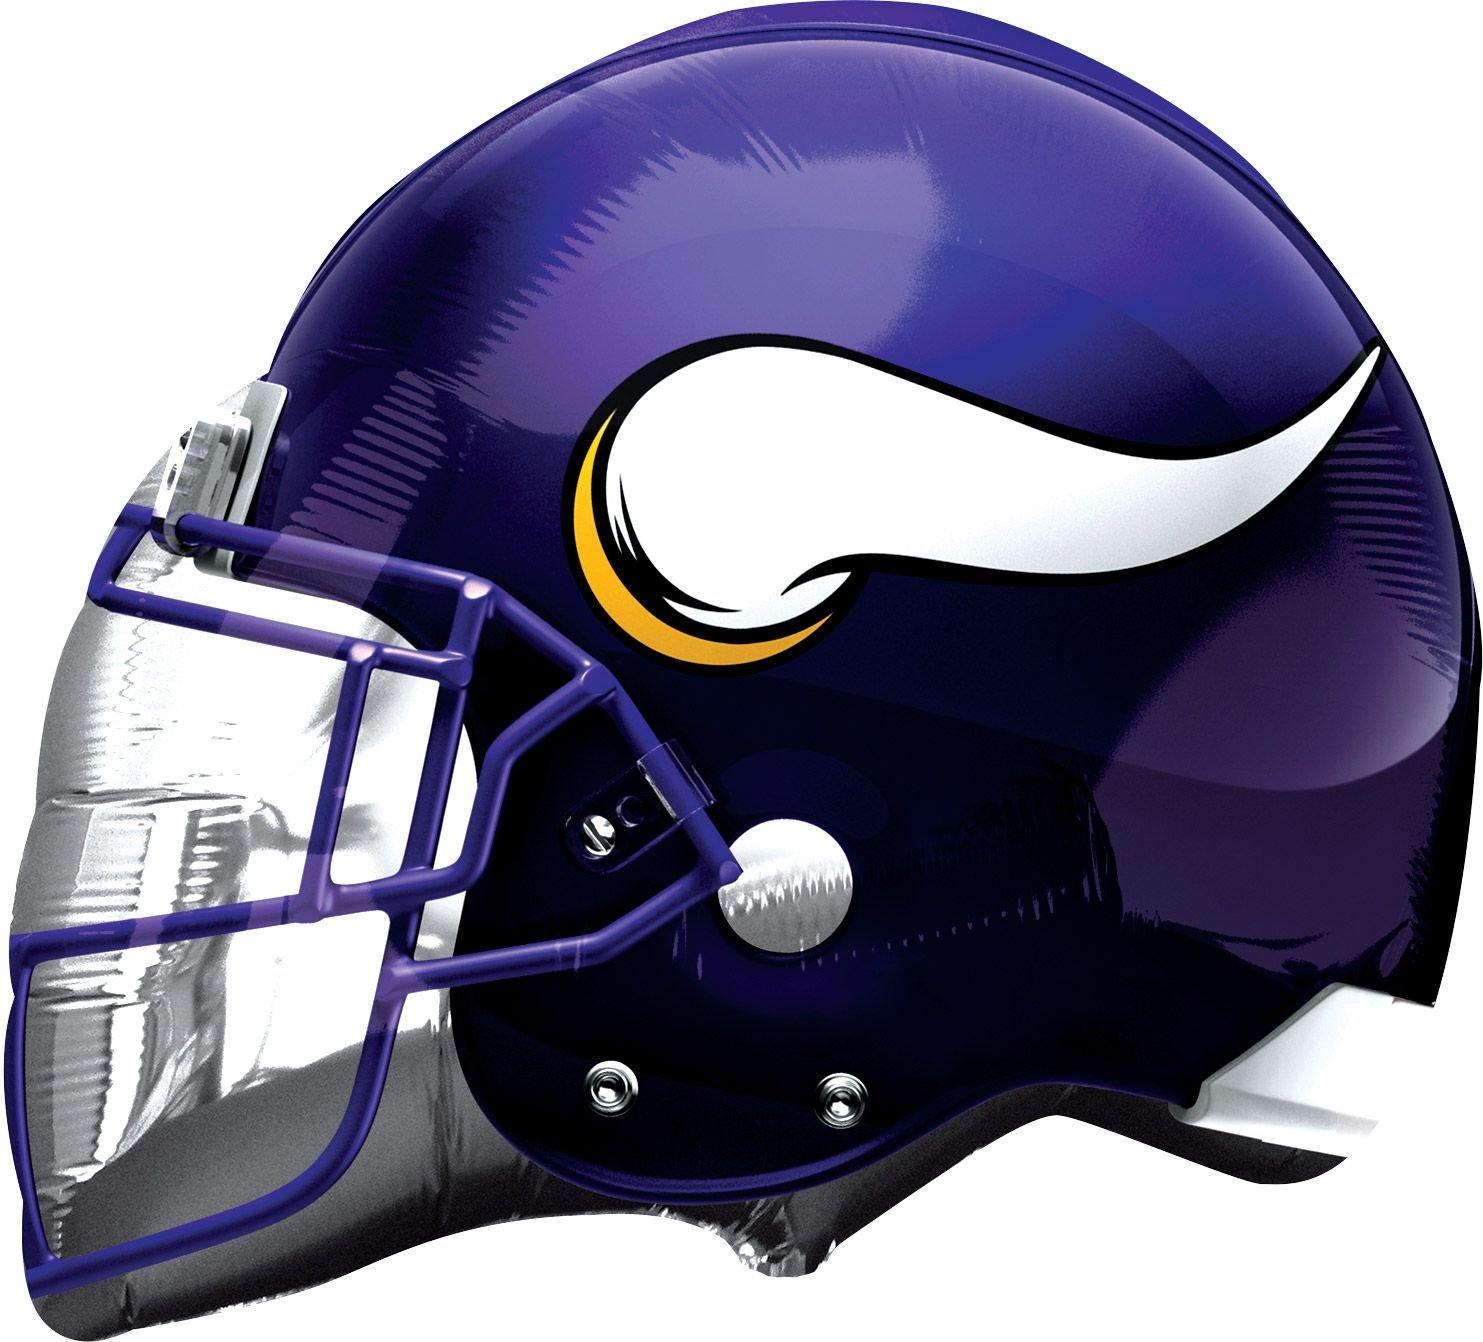 Minnesota Vikings Balloon 17in x 12in - Football